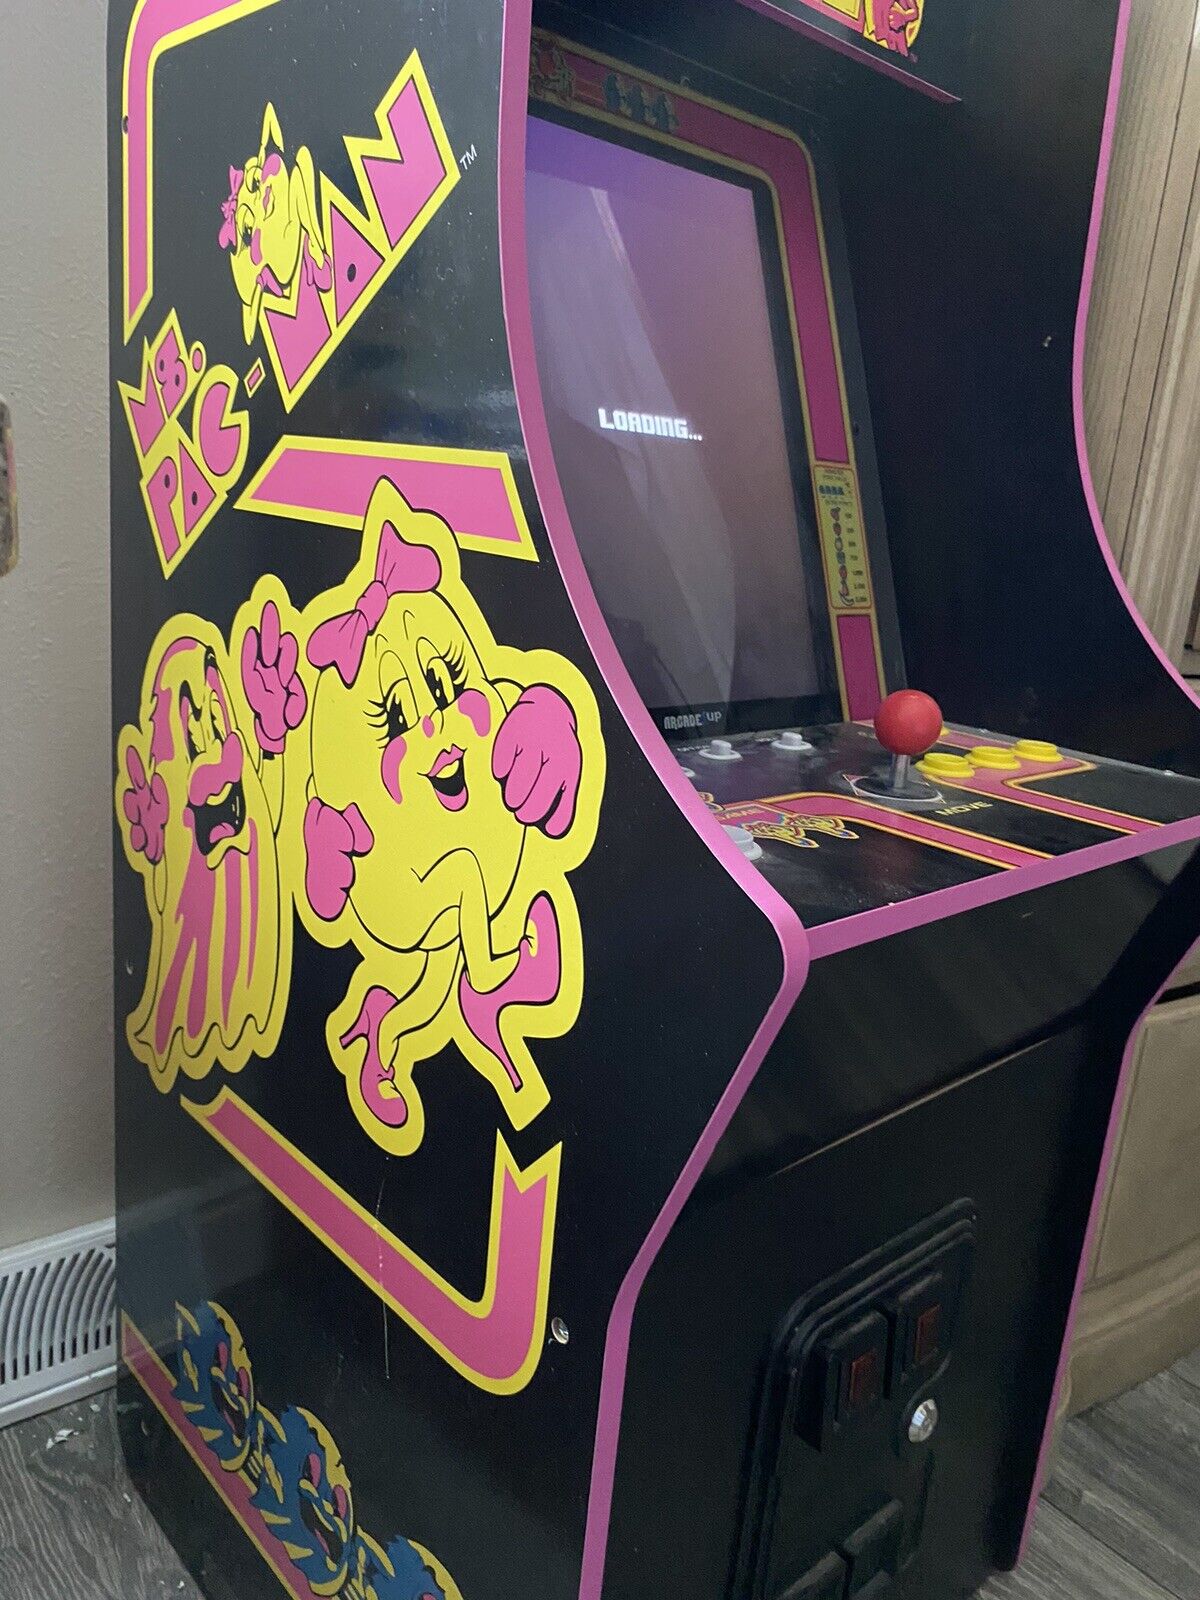 Arcade1up Ms. PAC-MAN Classic Arcade Game - MSP-A-300520